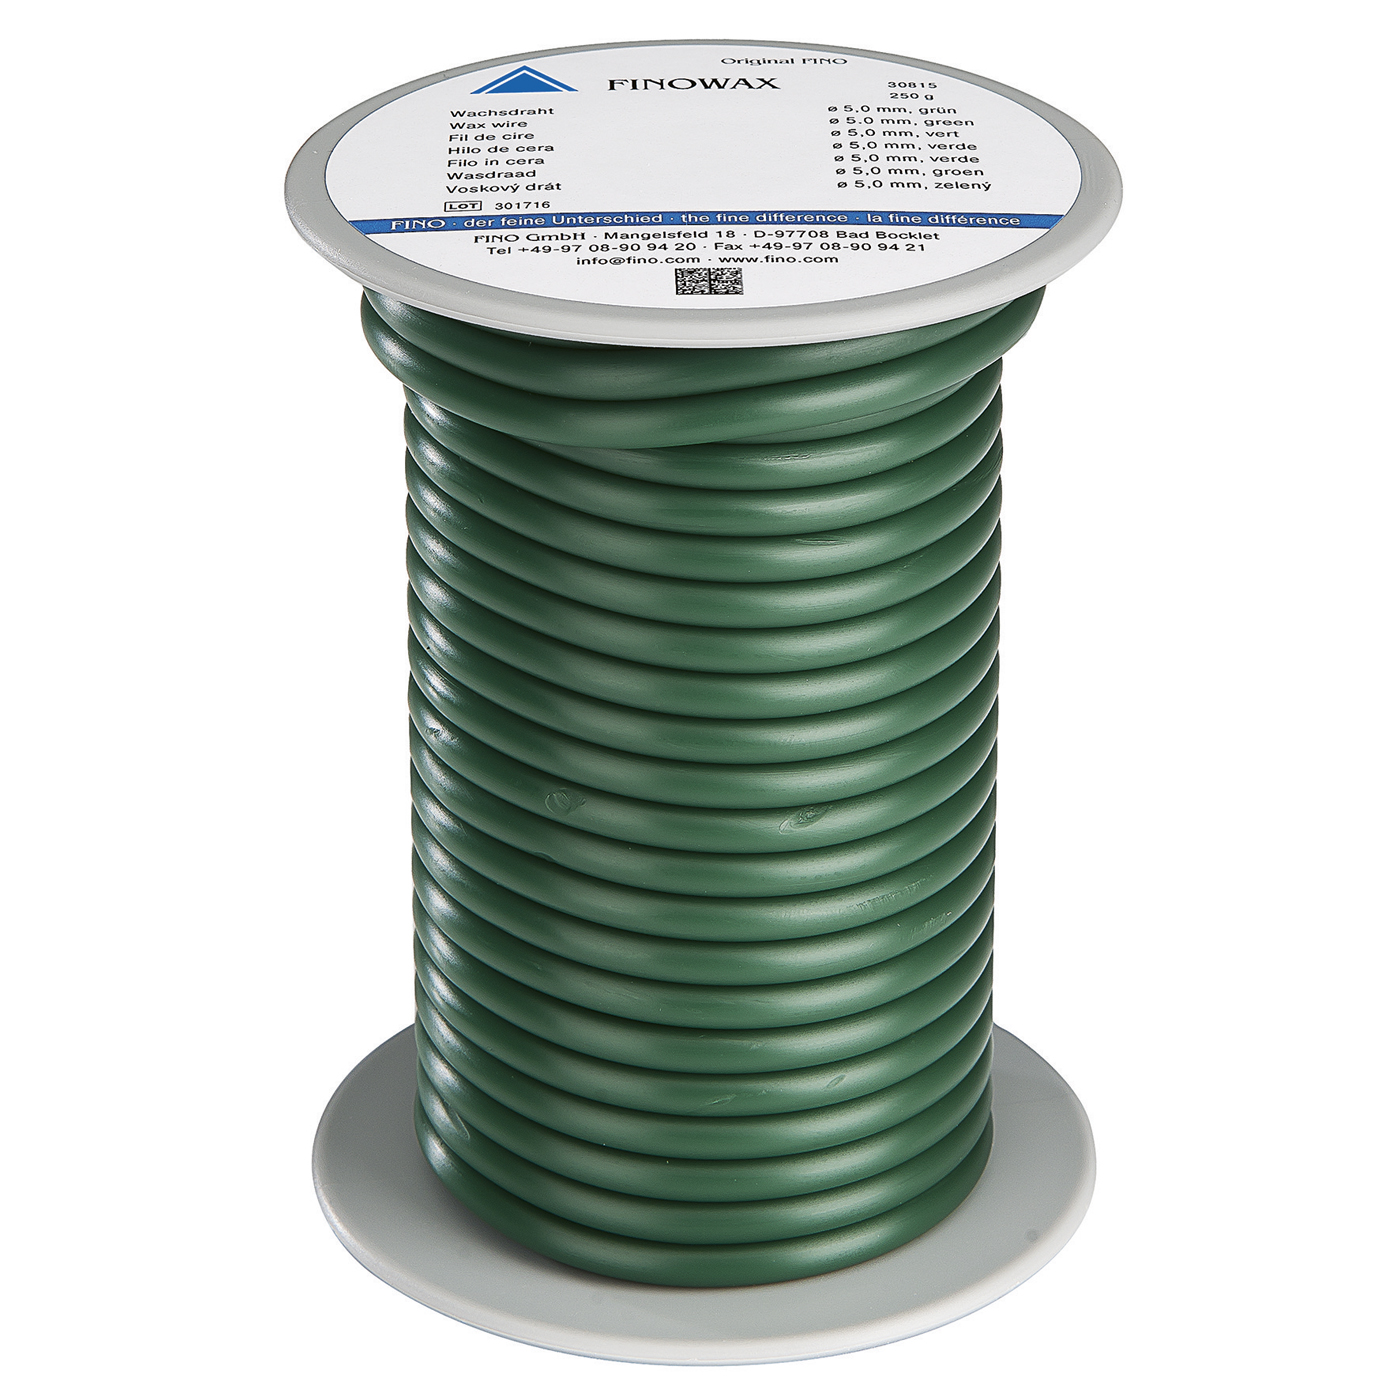 FINOWAX Wachsdraht, ø 5,0 mm, mittelhart, grün - 250 g